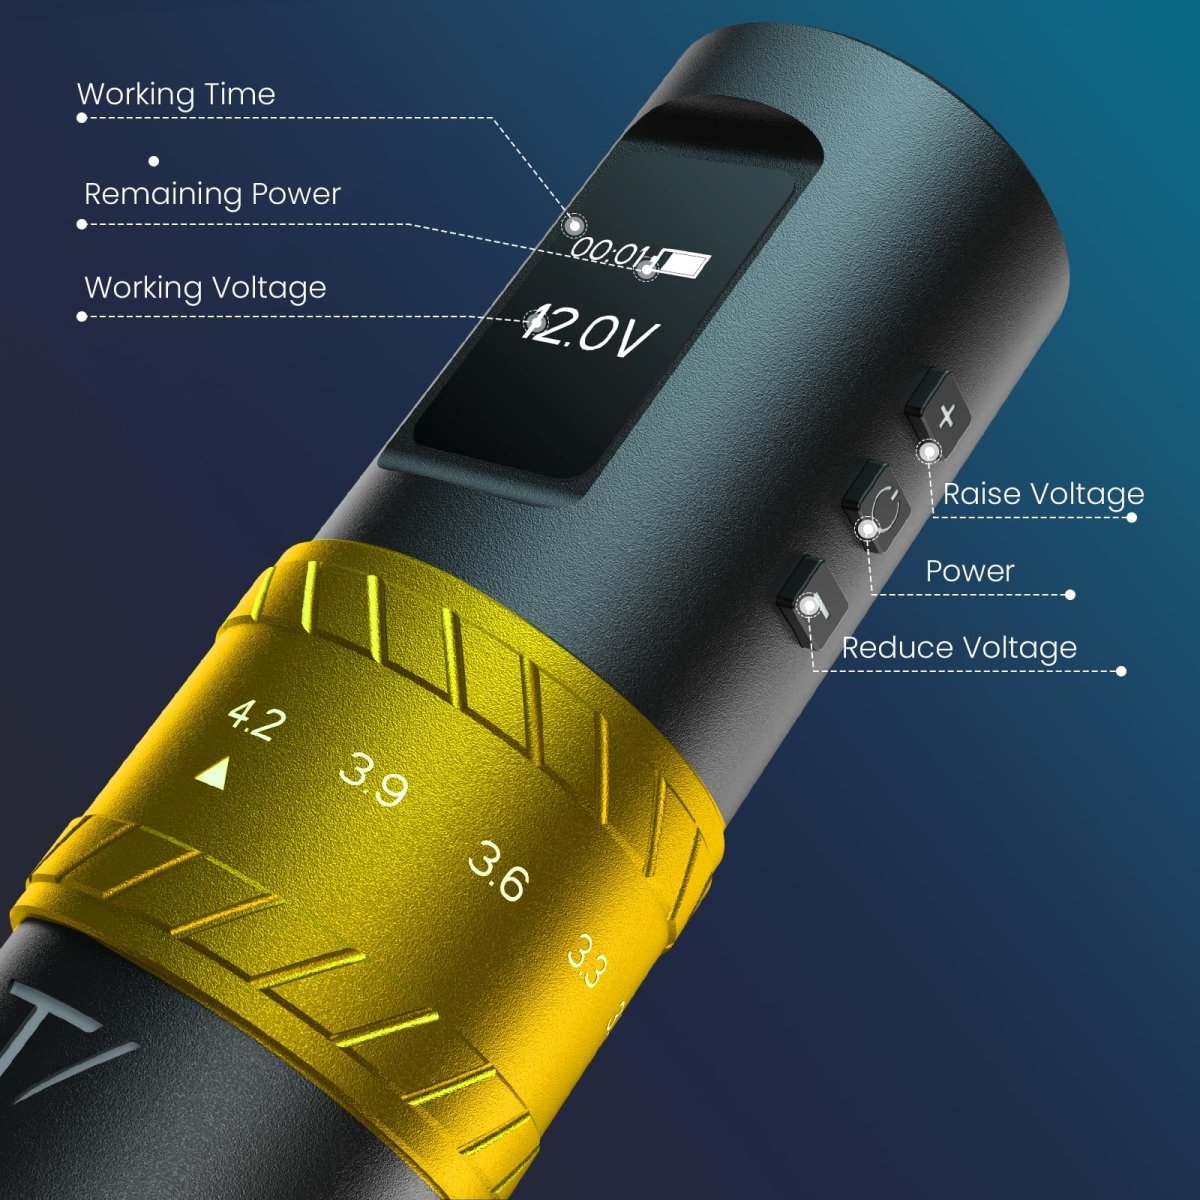 Tatvida Black Gold Wireless Tattoo Pen Machine, 2400mAh with 7 Stroke